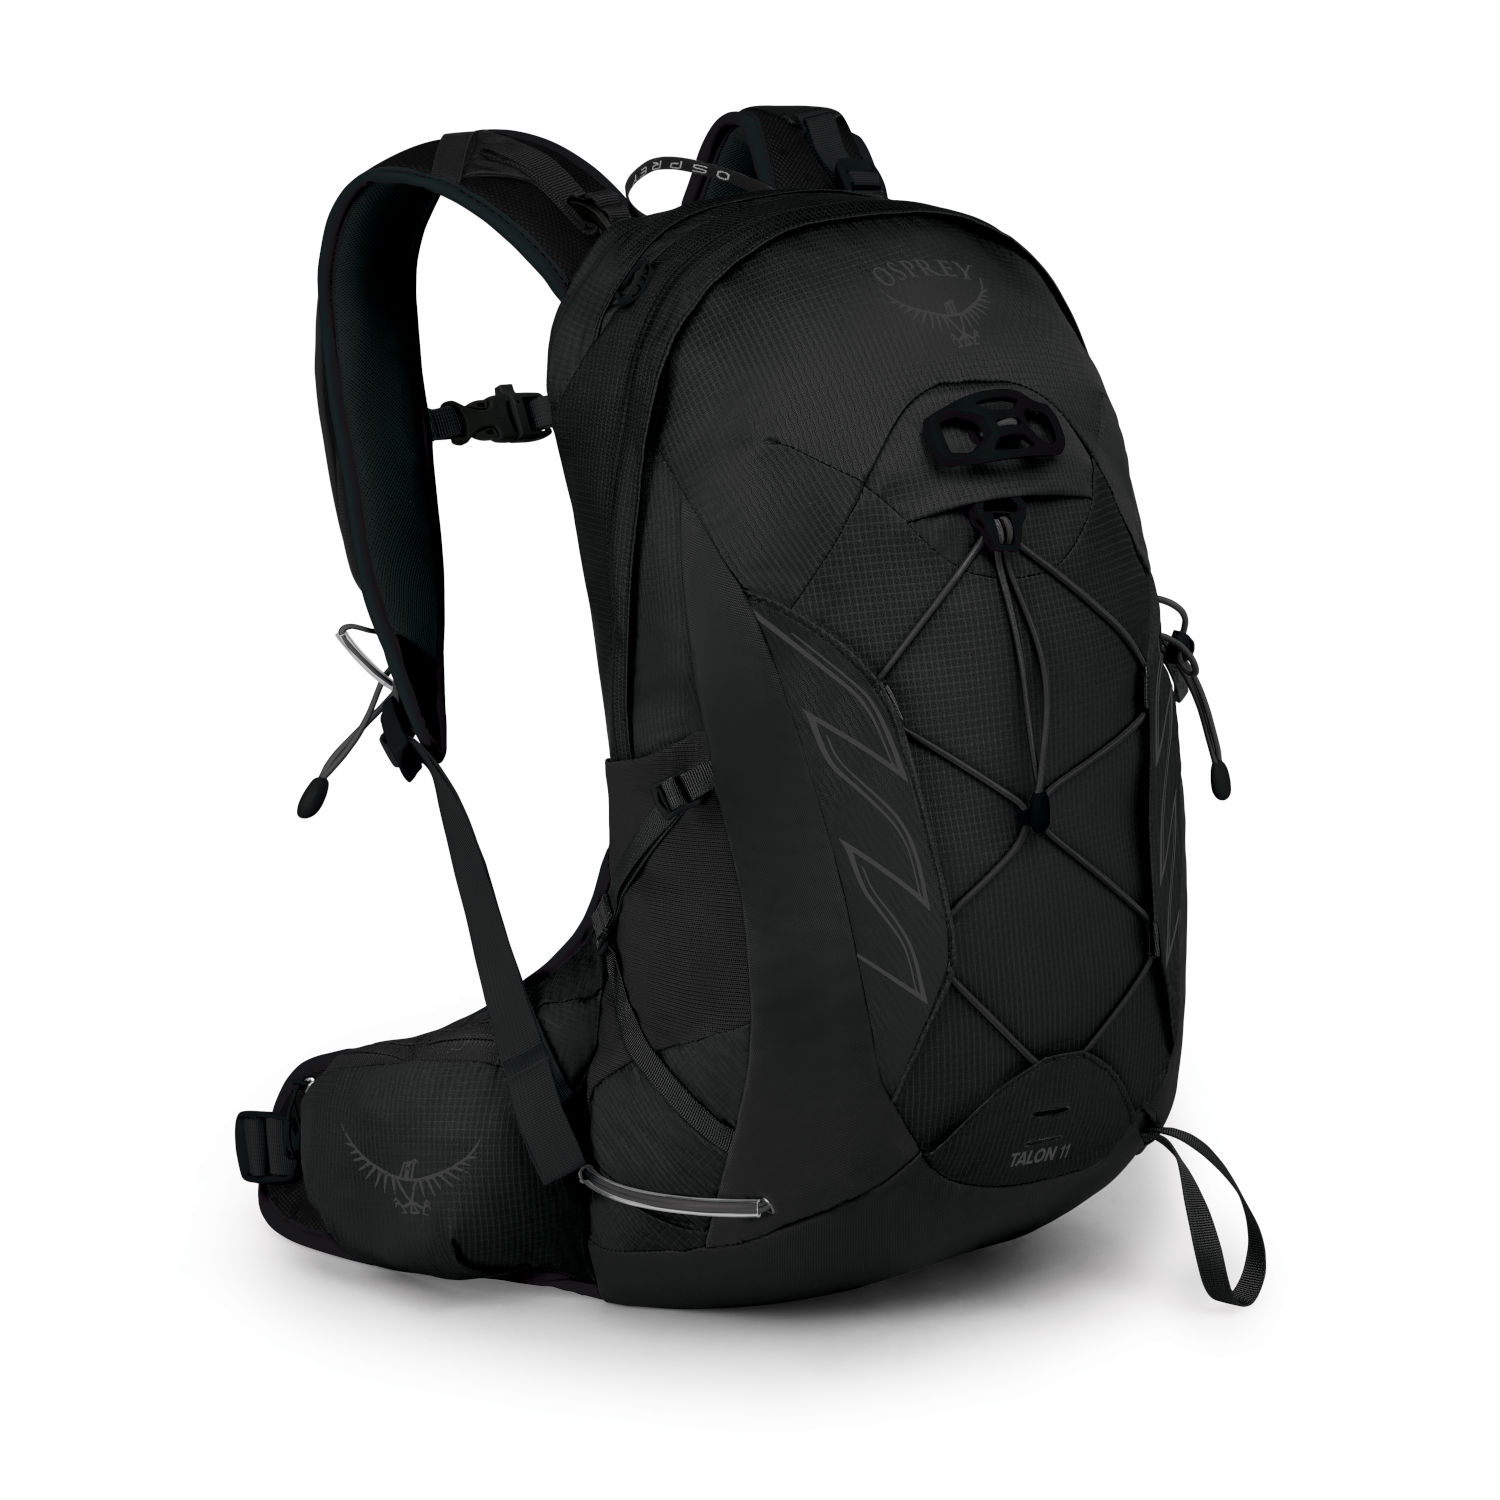 Productfoto van Osprey Talon 11 Backpack - Stlth. Black